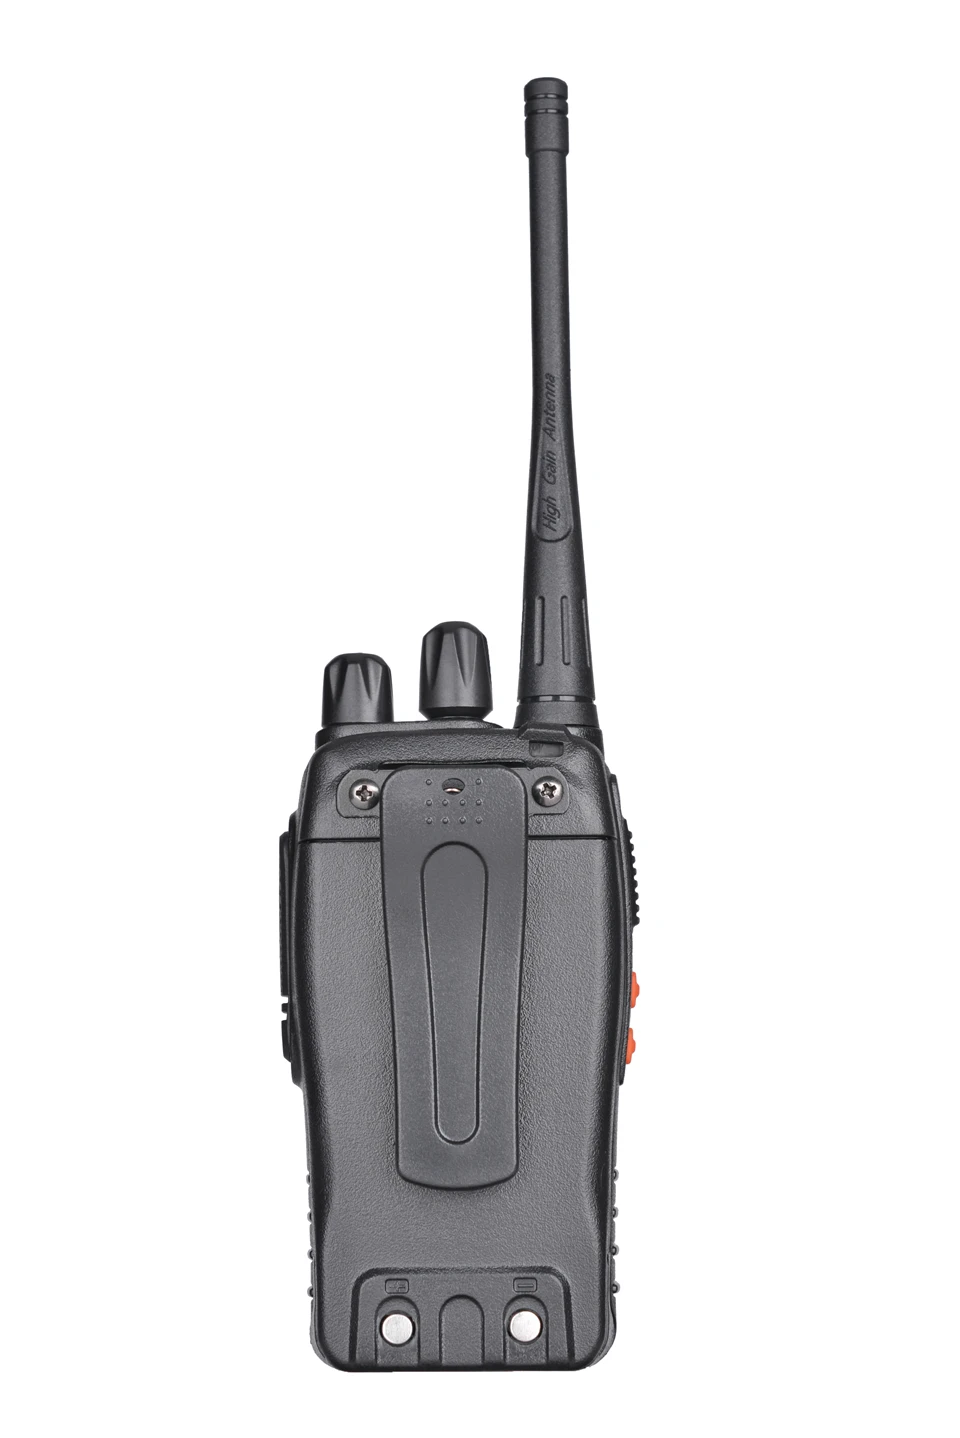 Baofeng BF-888s рация UHF BF888s 5 Вт 16CH портативная Walki Talki 400-470 МГц 888S CB двухстороннее радио Comunicador